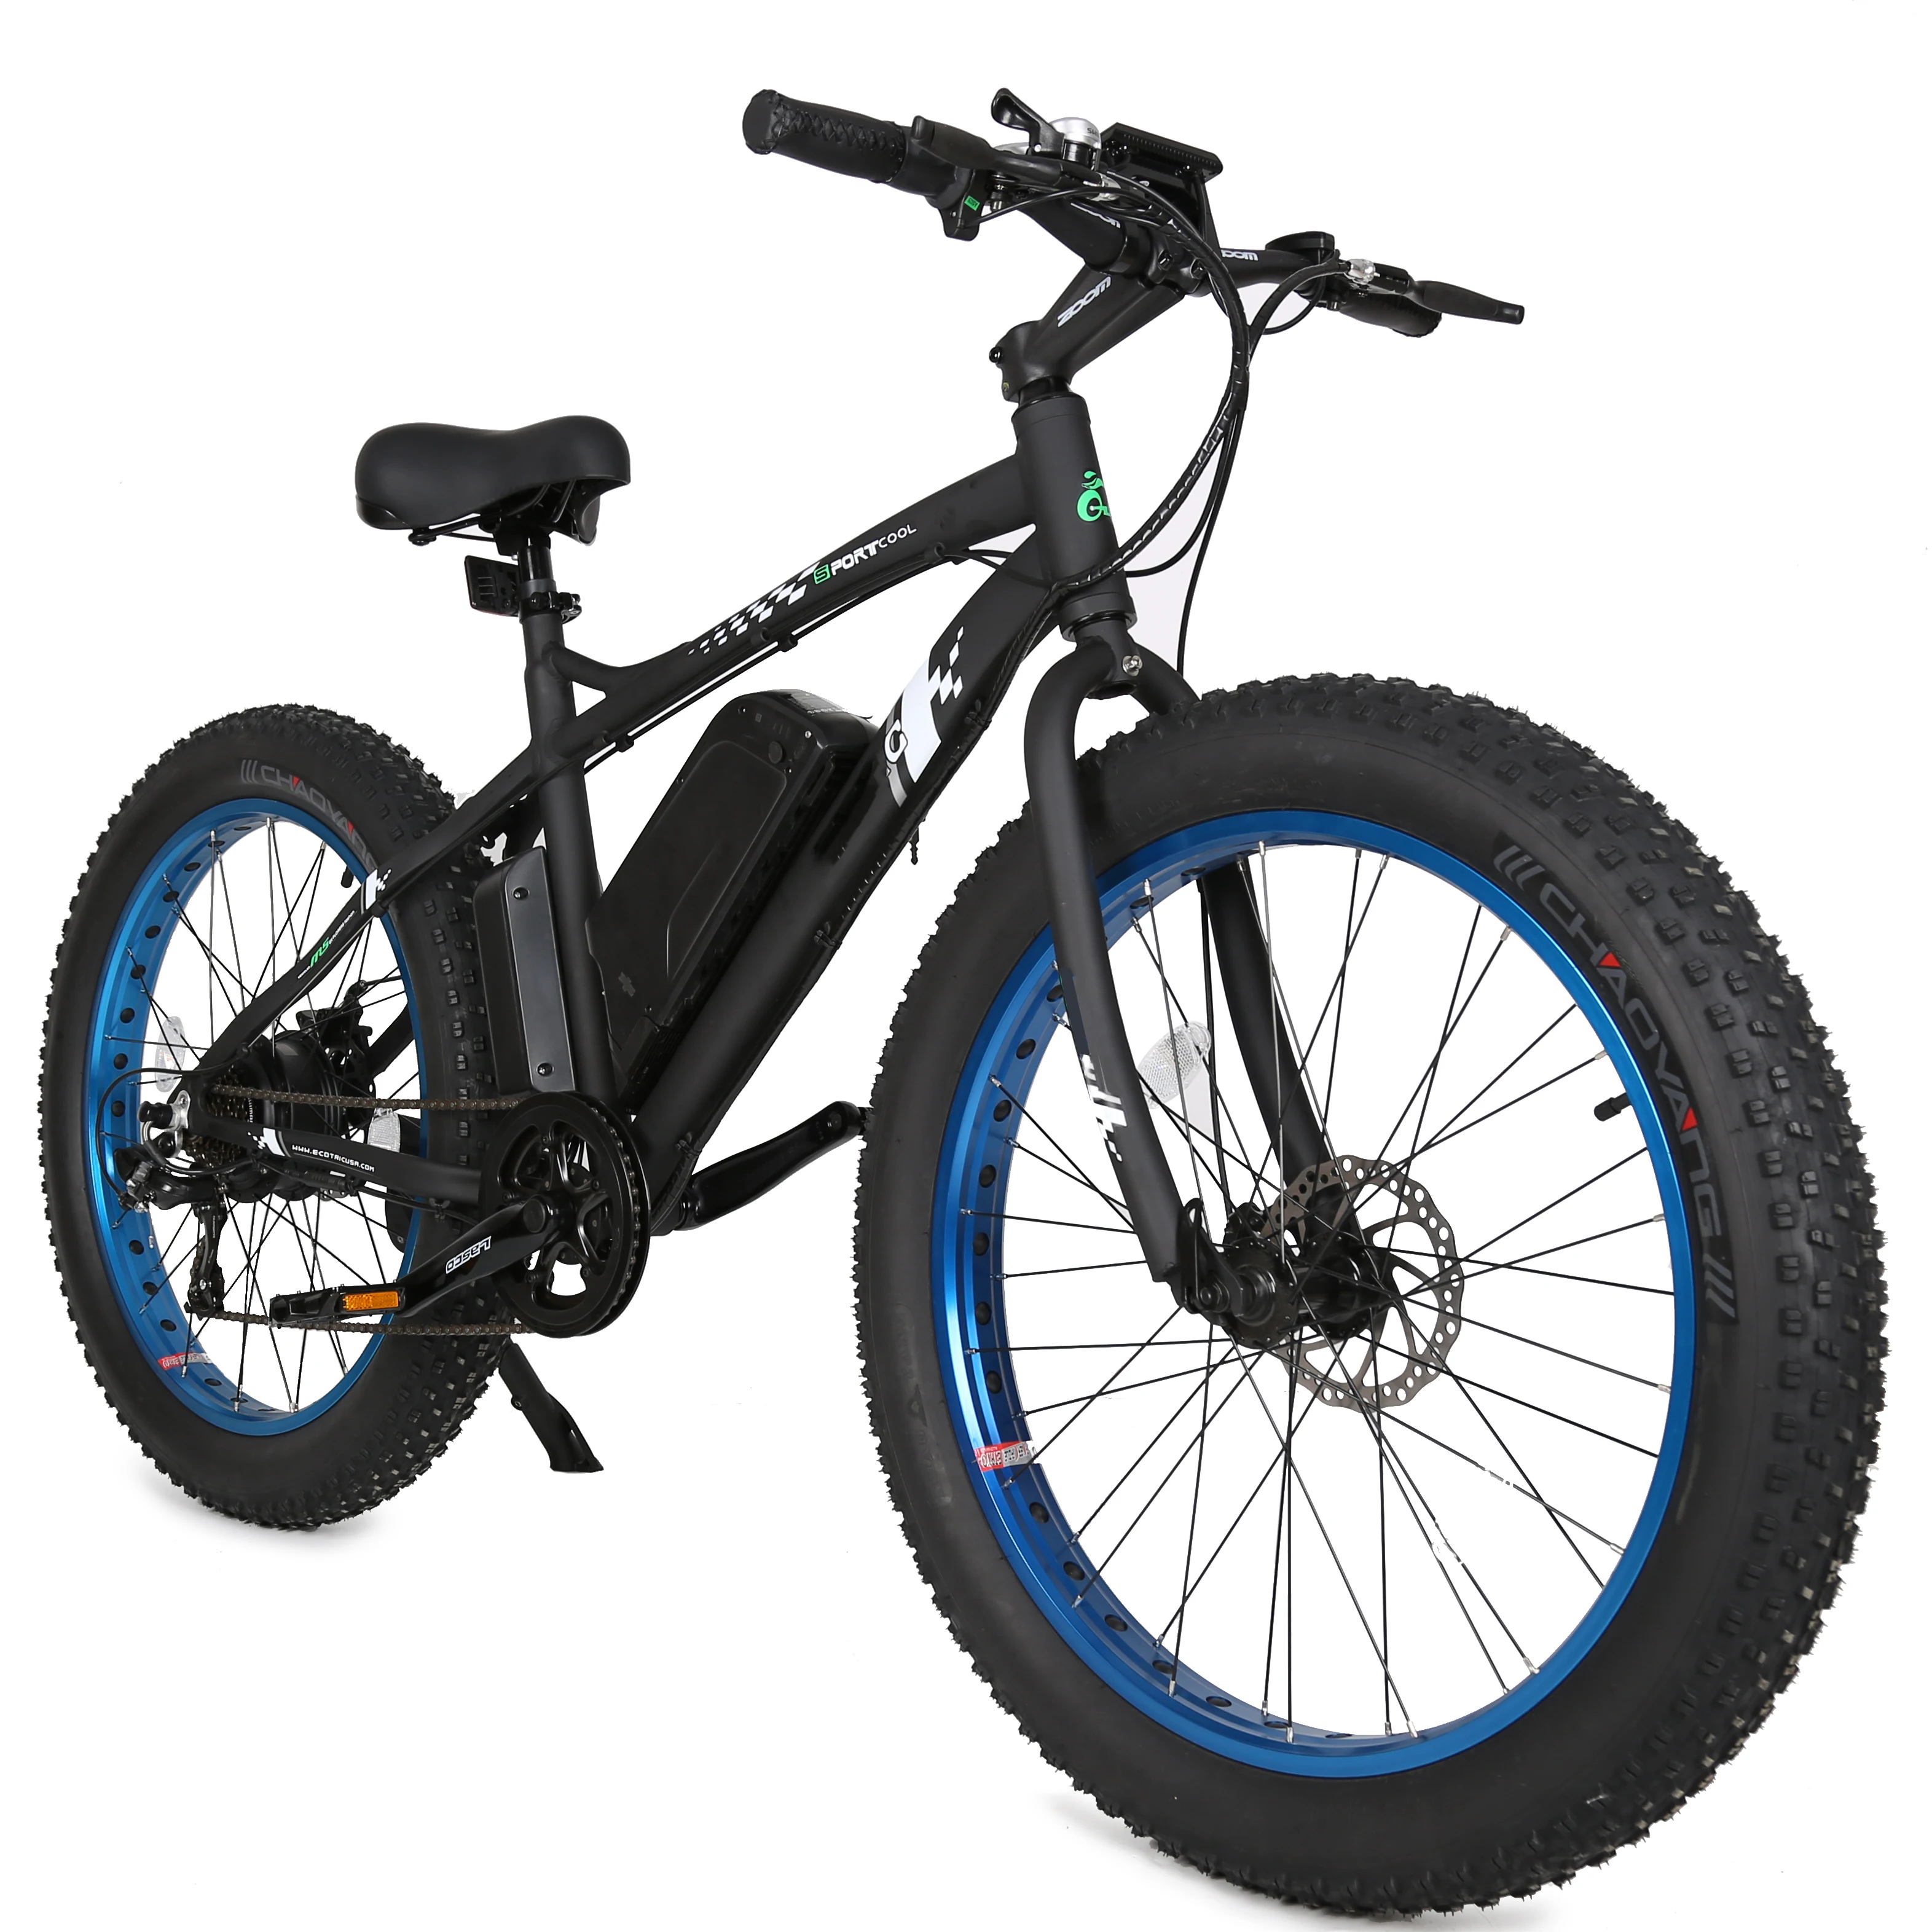 

2019 hot sale High quality 500w 48v electric fat bike retro ebike cruiser electric bike with Ce En15194